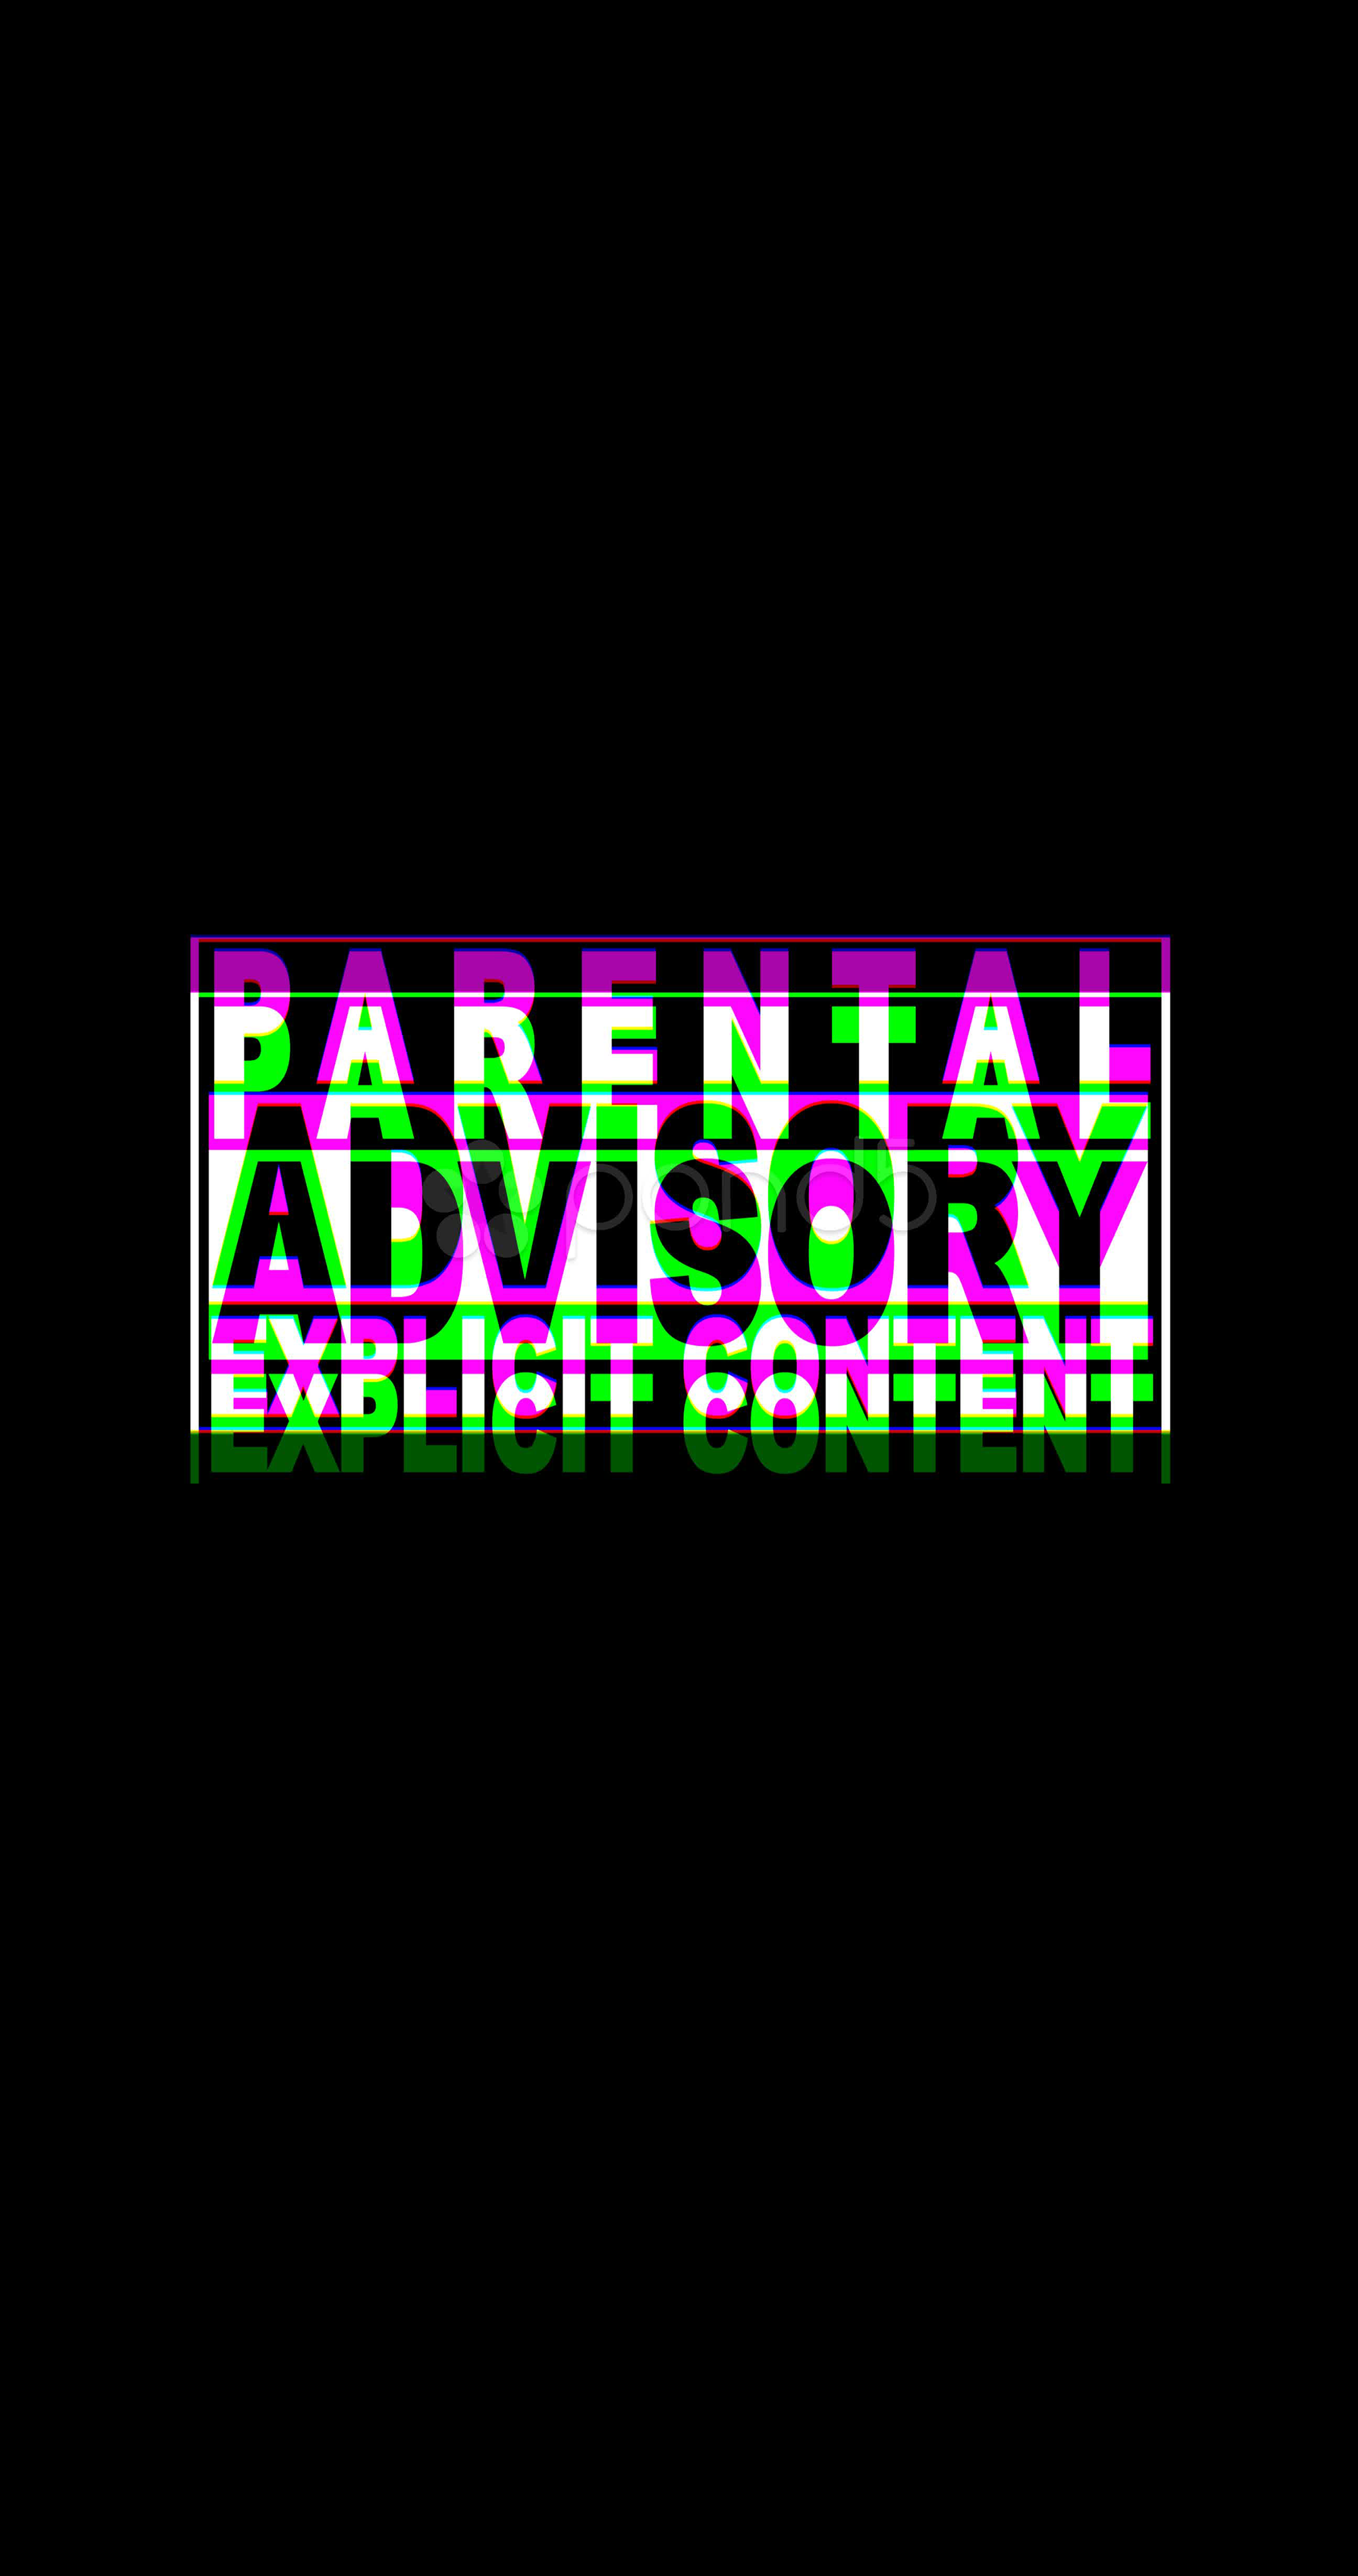 Cool Parental Advisory Logo Wallpapers